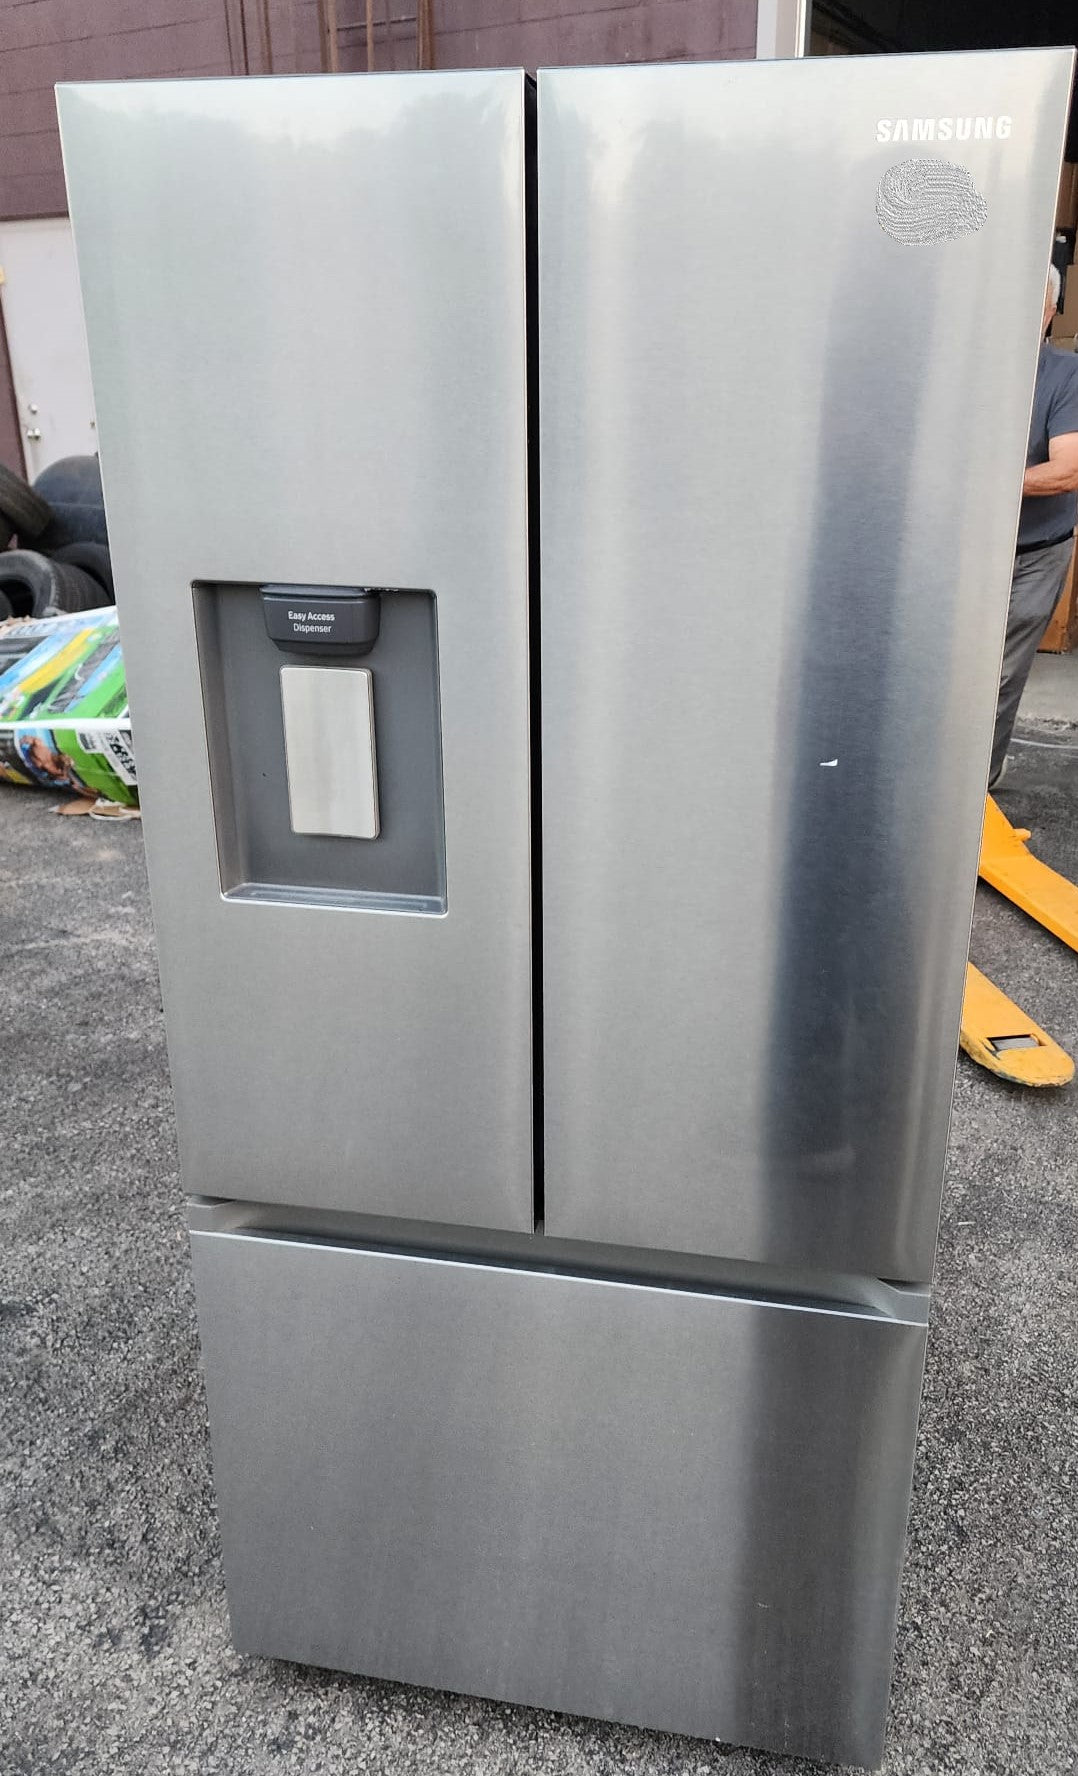 Samsung 30 in. 22.1 cu. ft. Stainless Steel French Door Refrigerator with Recessed Handle and Flat Door Design